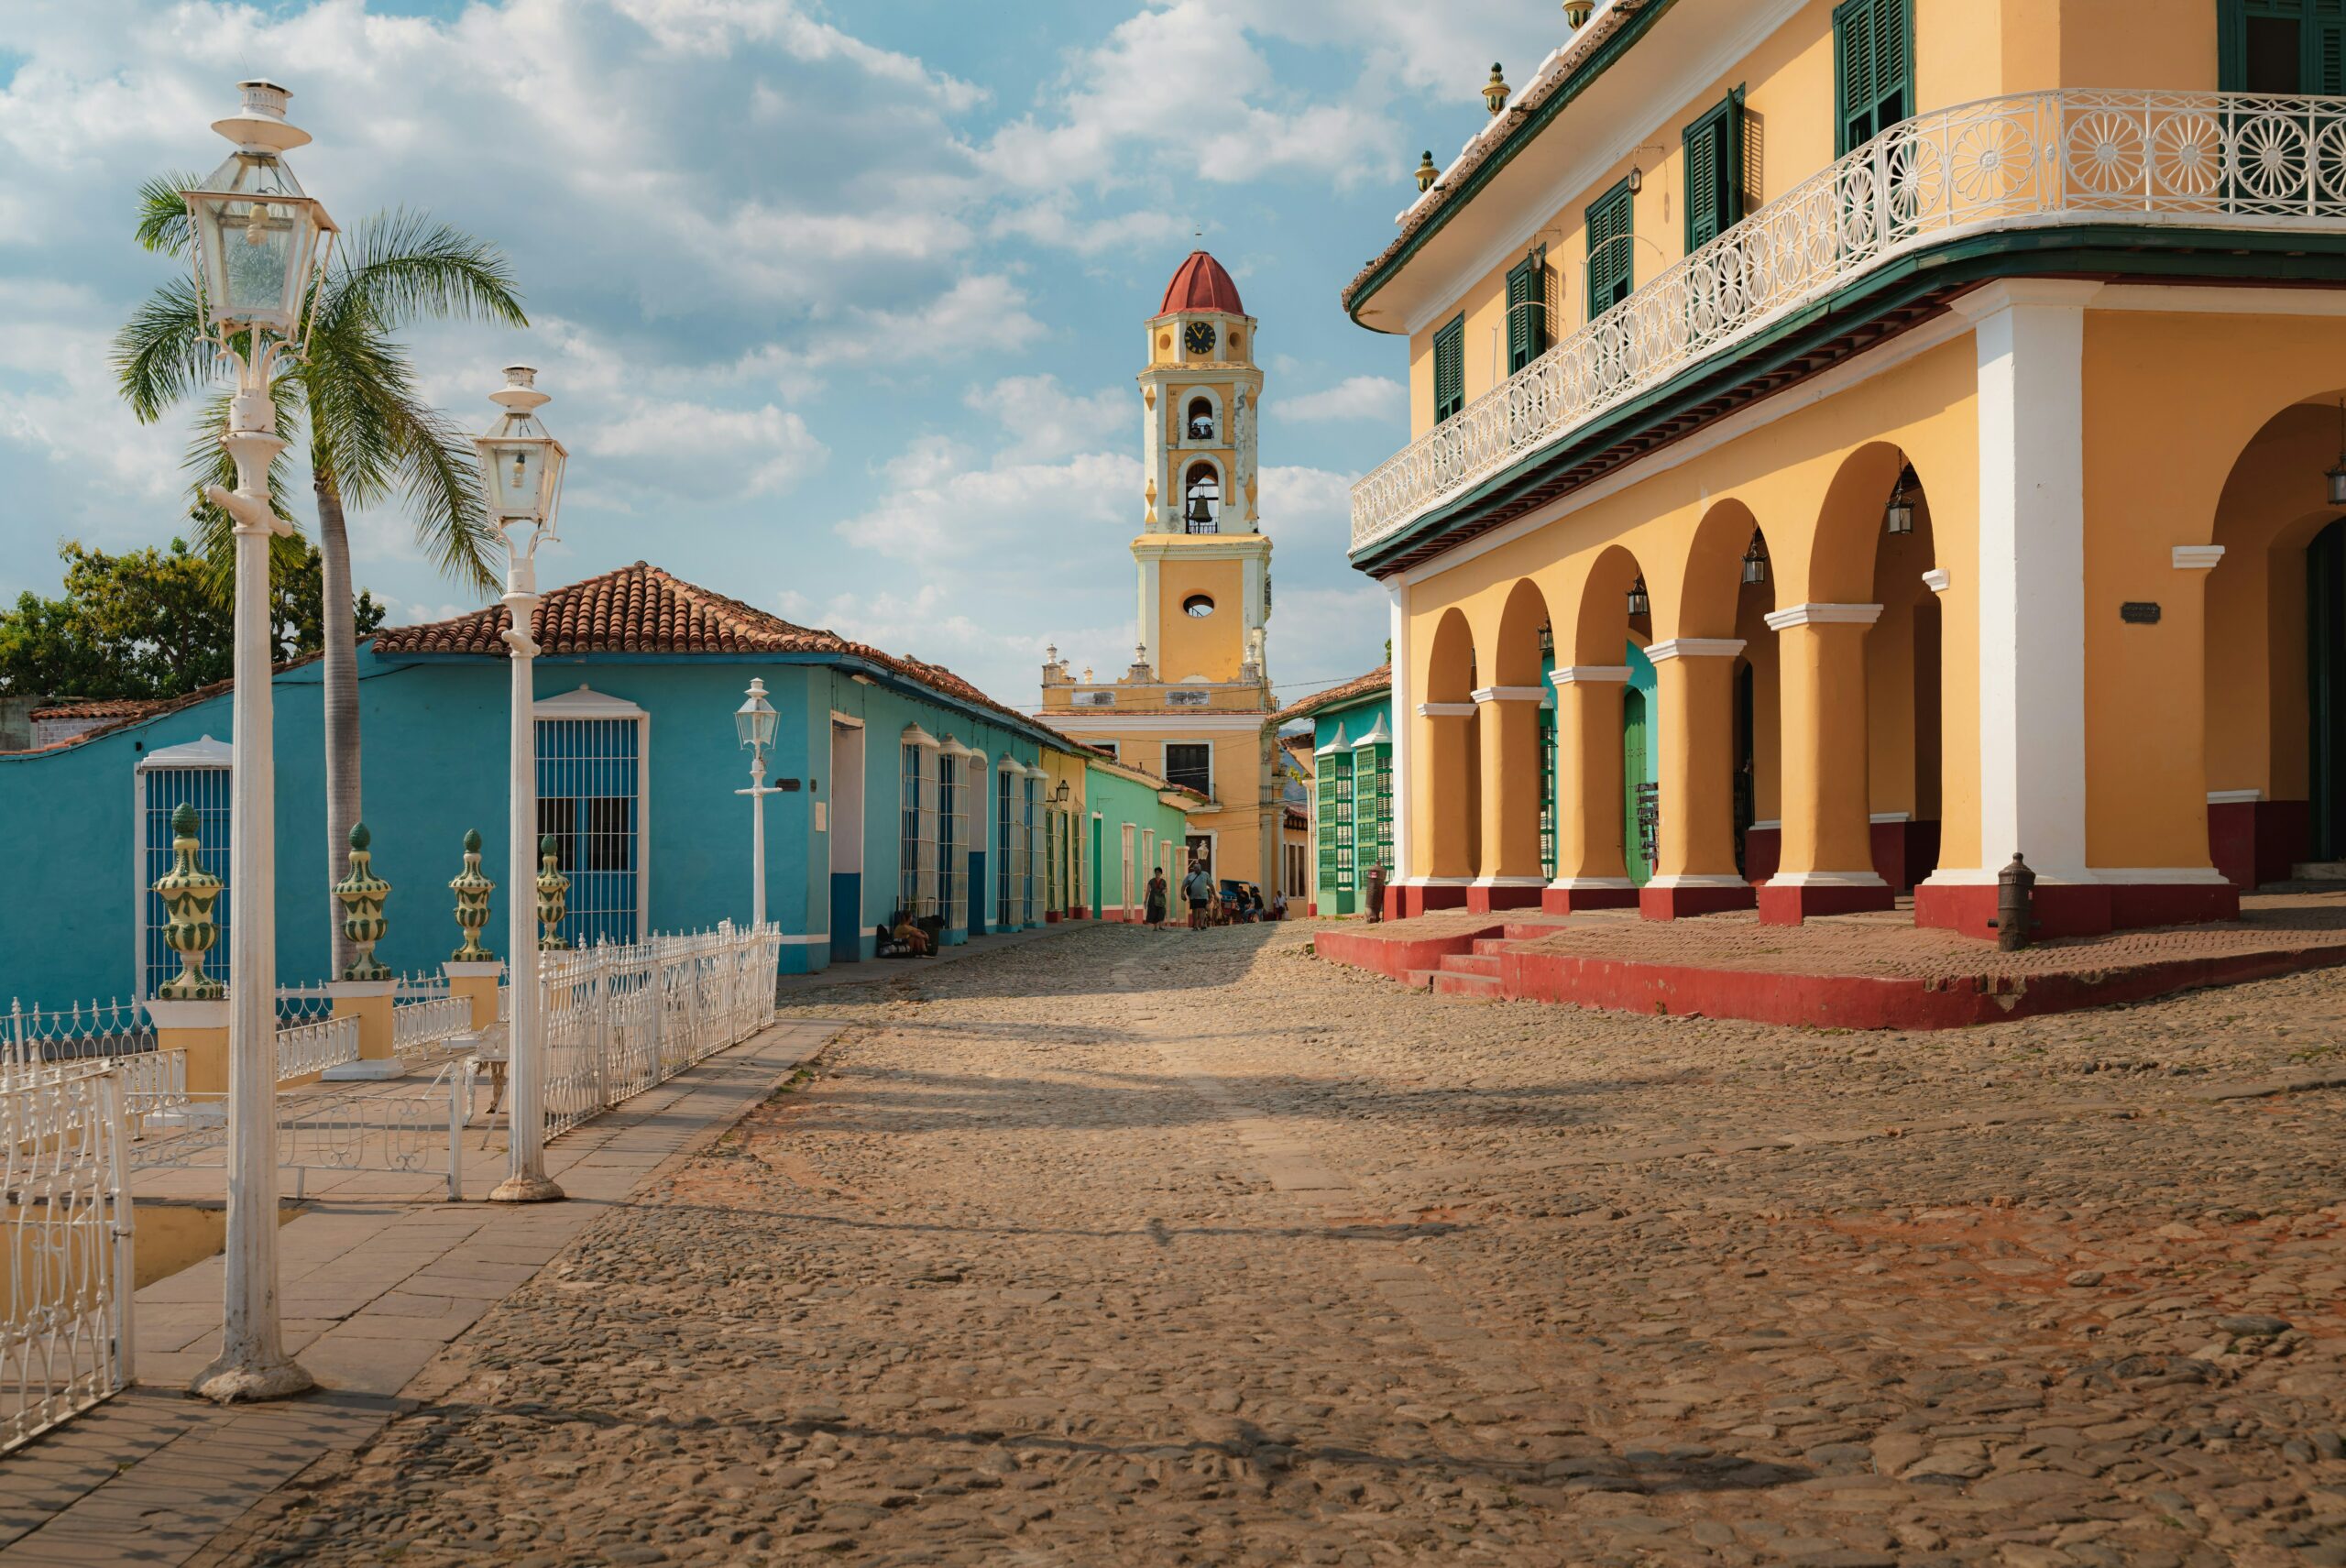 REJSEBESKRIVELSE: CUBA